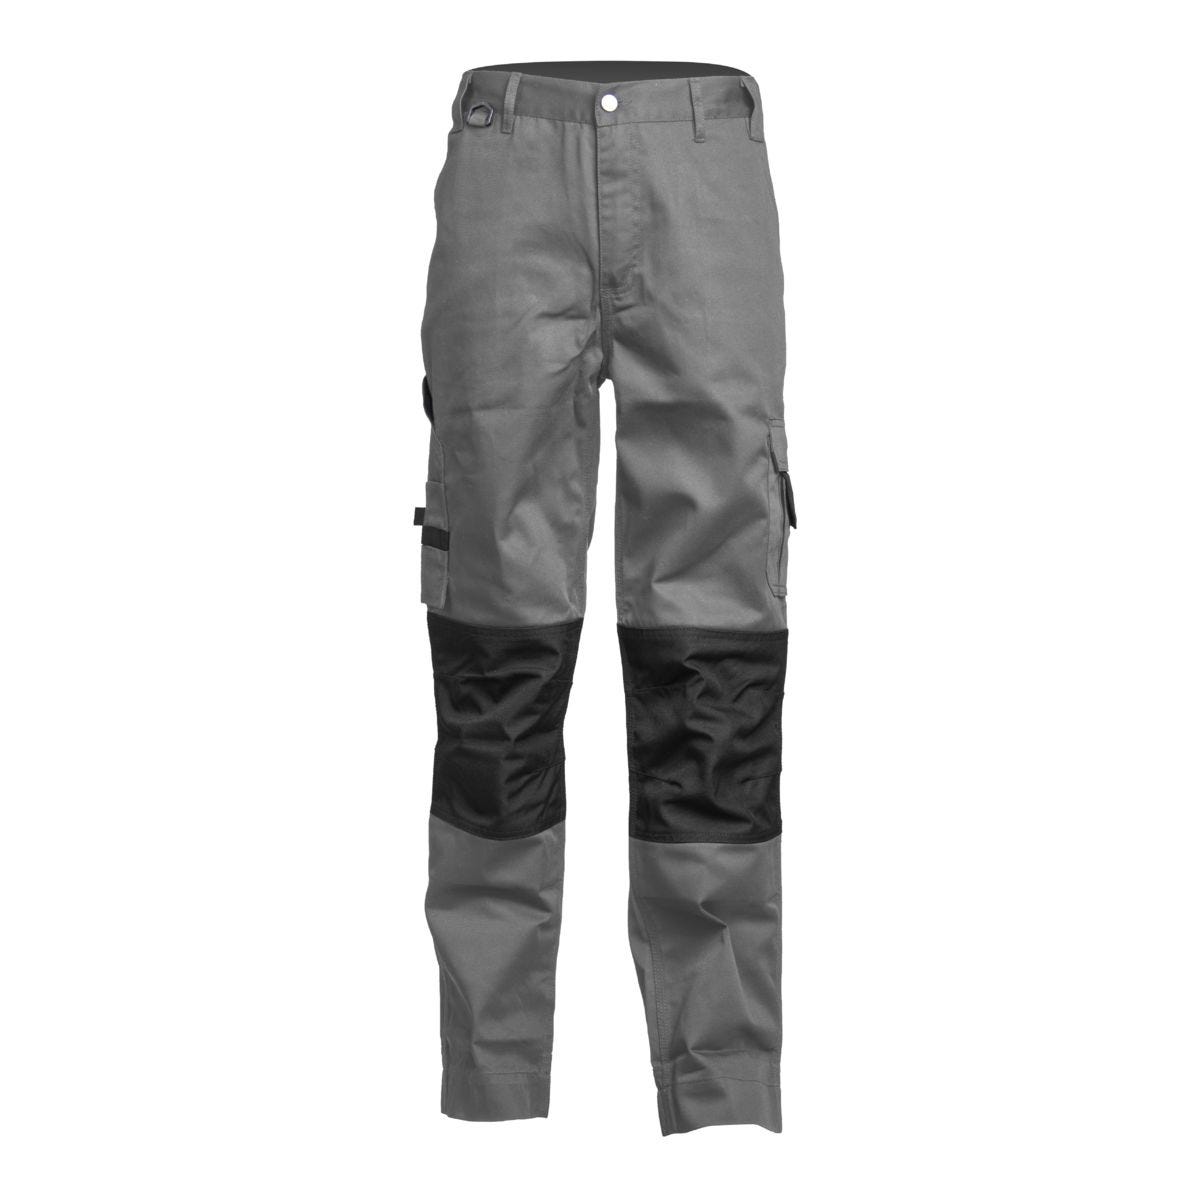 Pantalon CLASS gris moyen - COVERGUARD - Taille XS 0